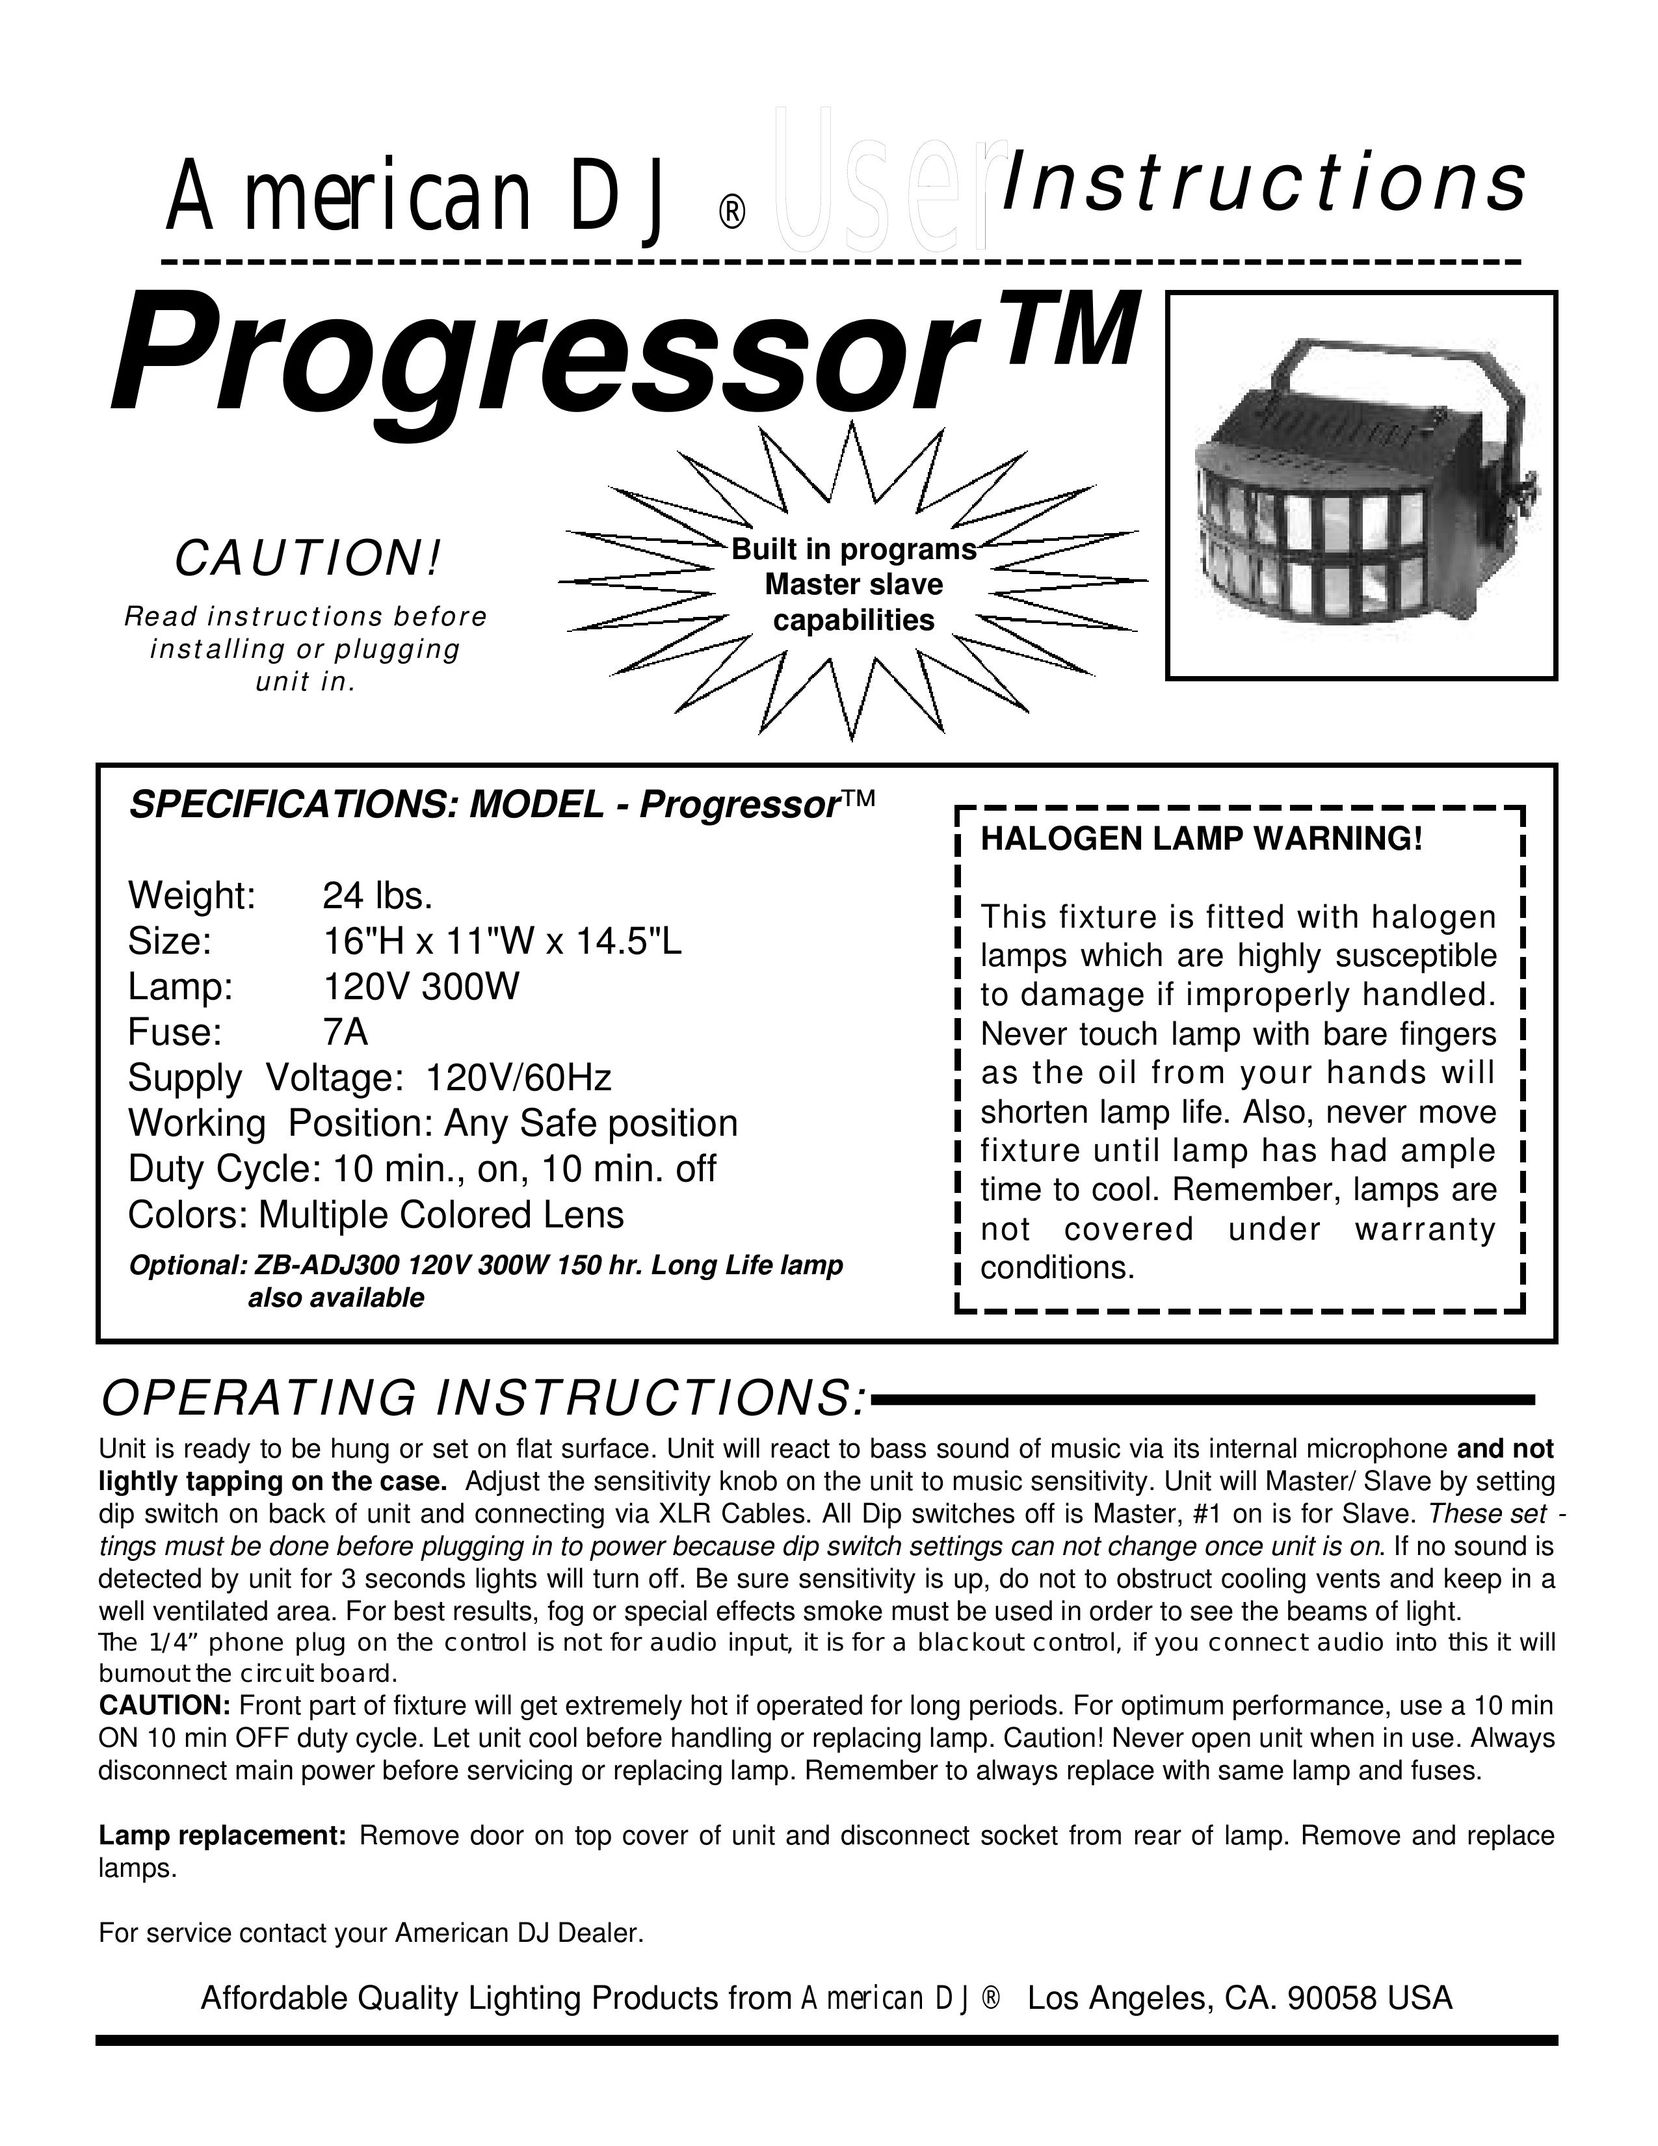 American DJ Progressor Stereo System User Manual